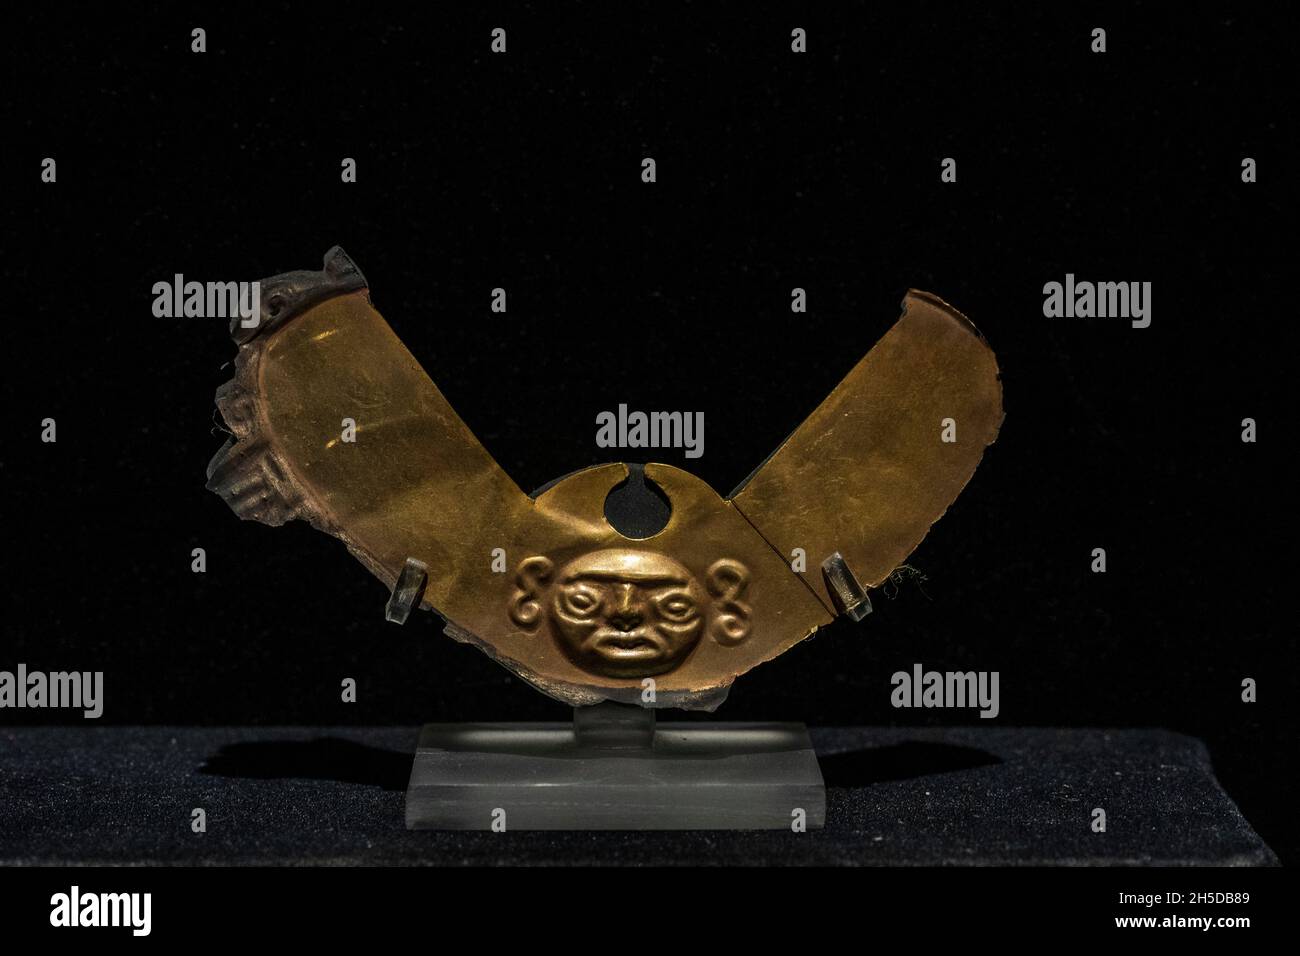 Pre-Columbian Jewelry Moche culture 100 AC-800 AC Perú Stock Photo